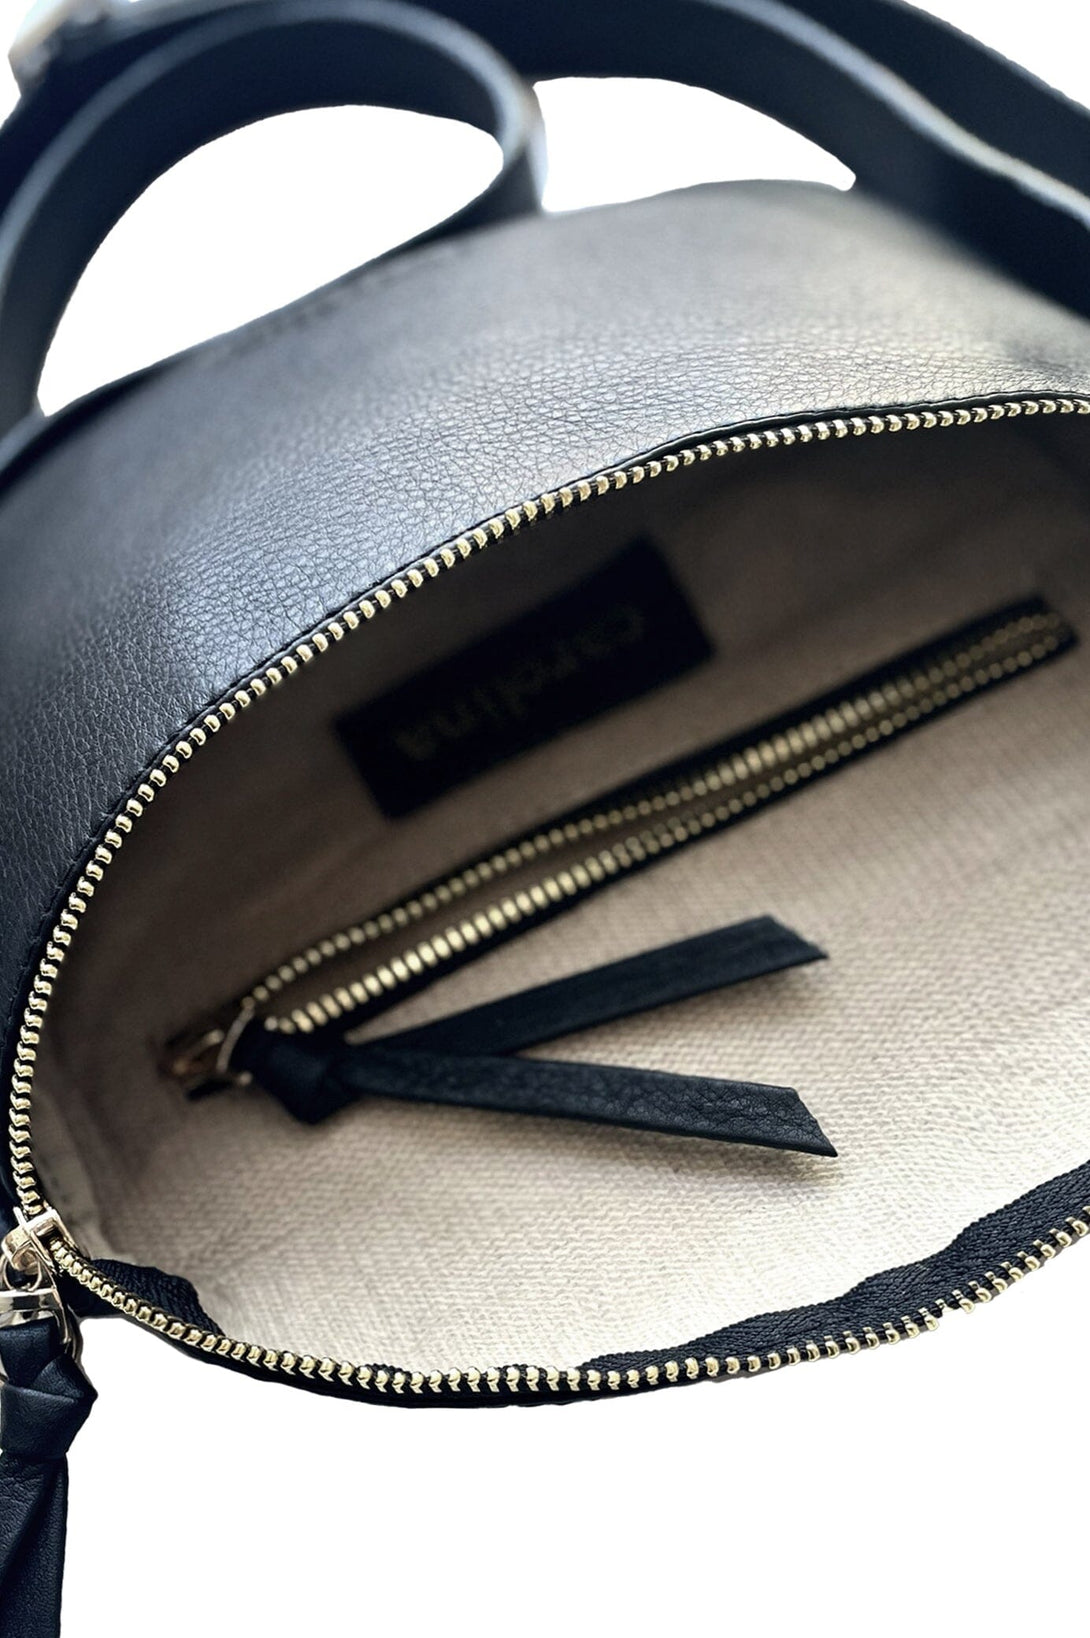 Ramona Small Soft Leather Handbag Black Leather